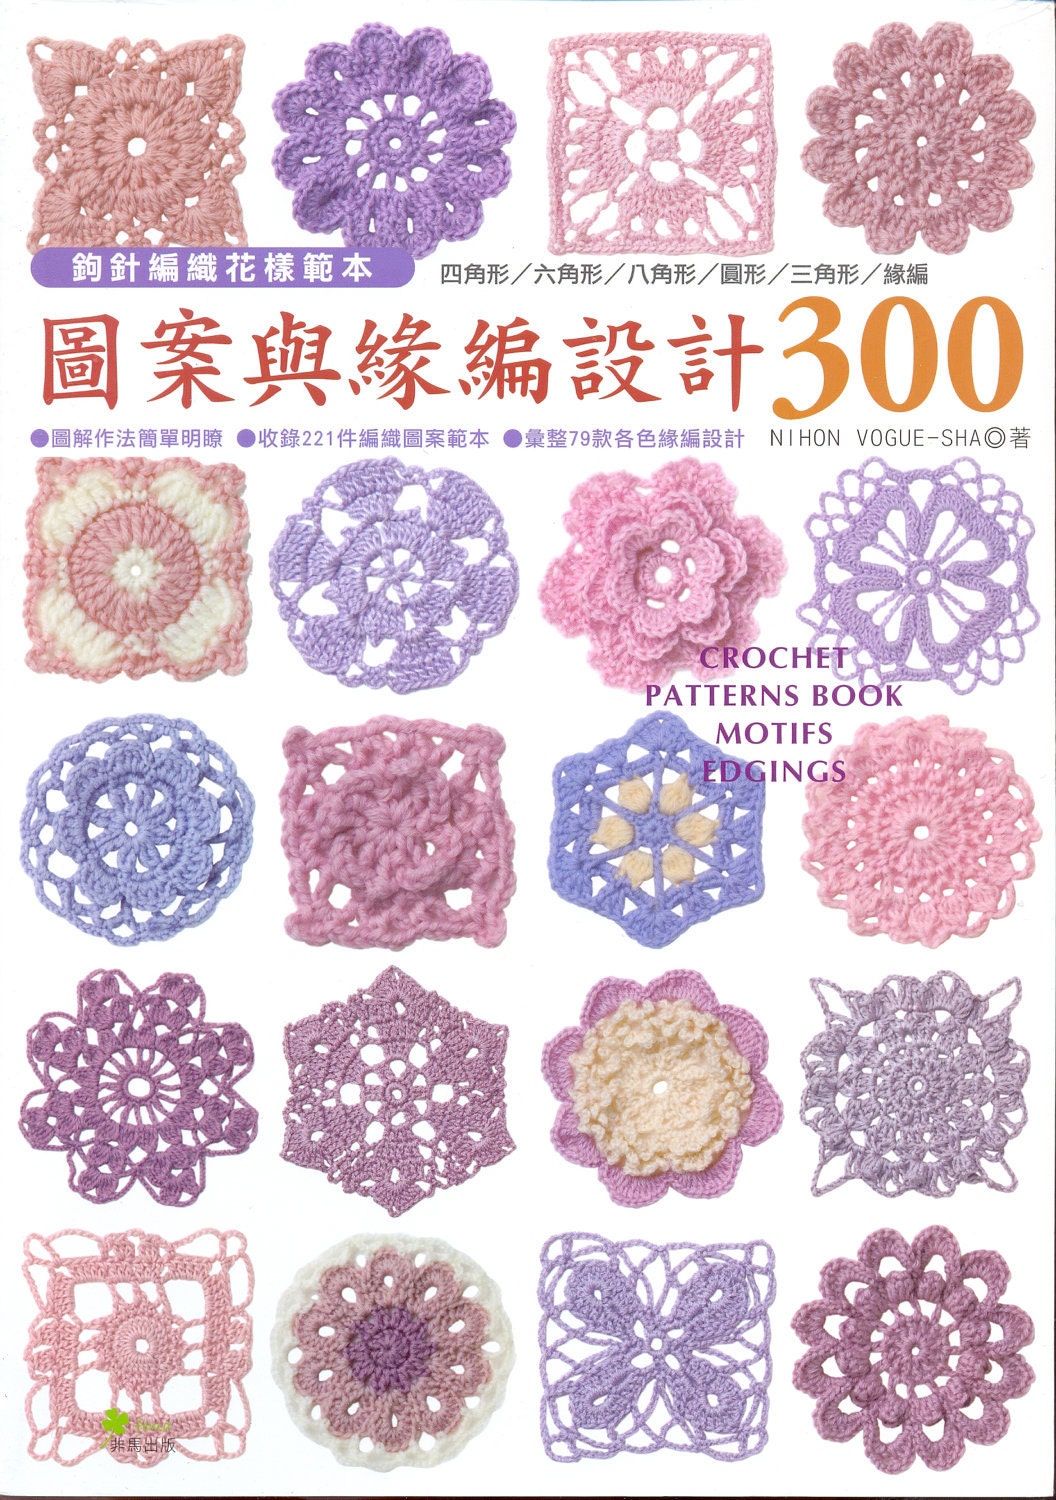 Crocheting Doily Patterns Book 300 Japanese by MeMeCraftwork